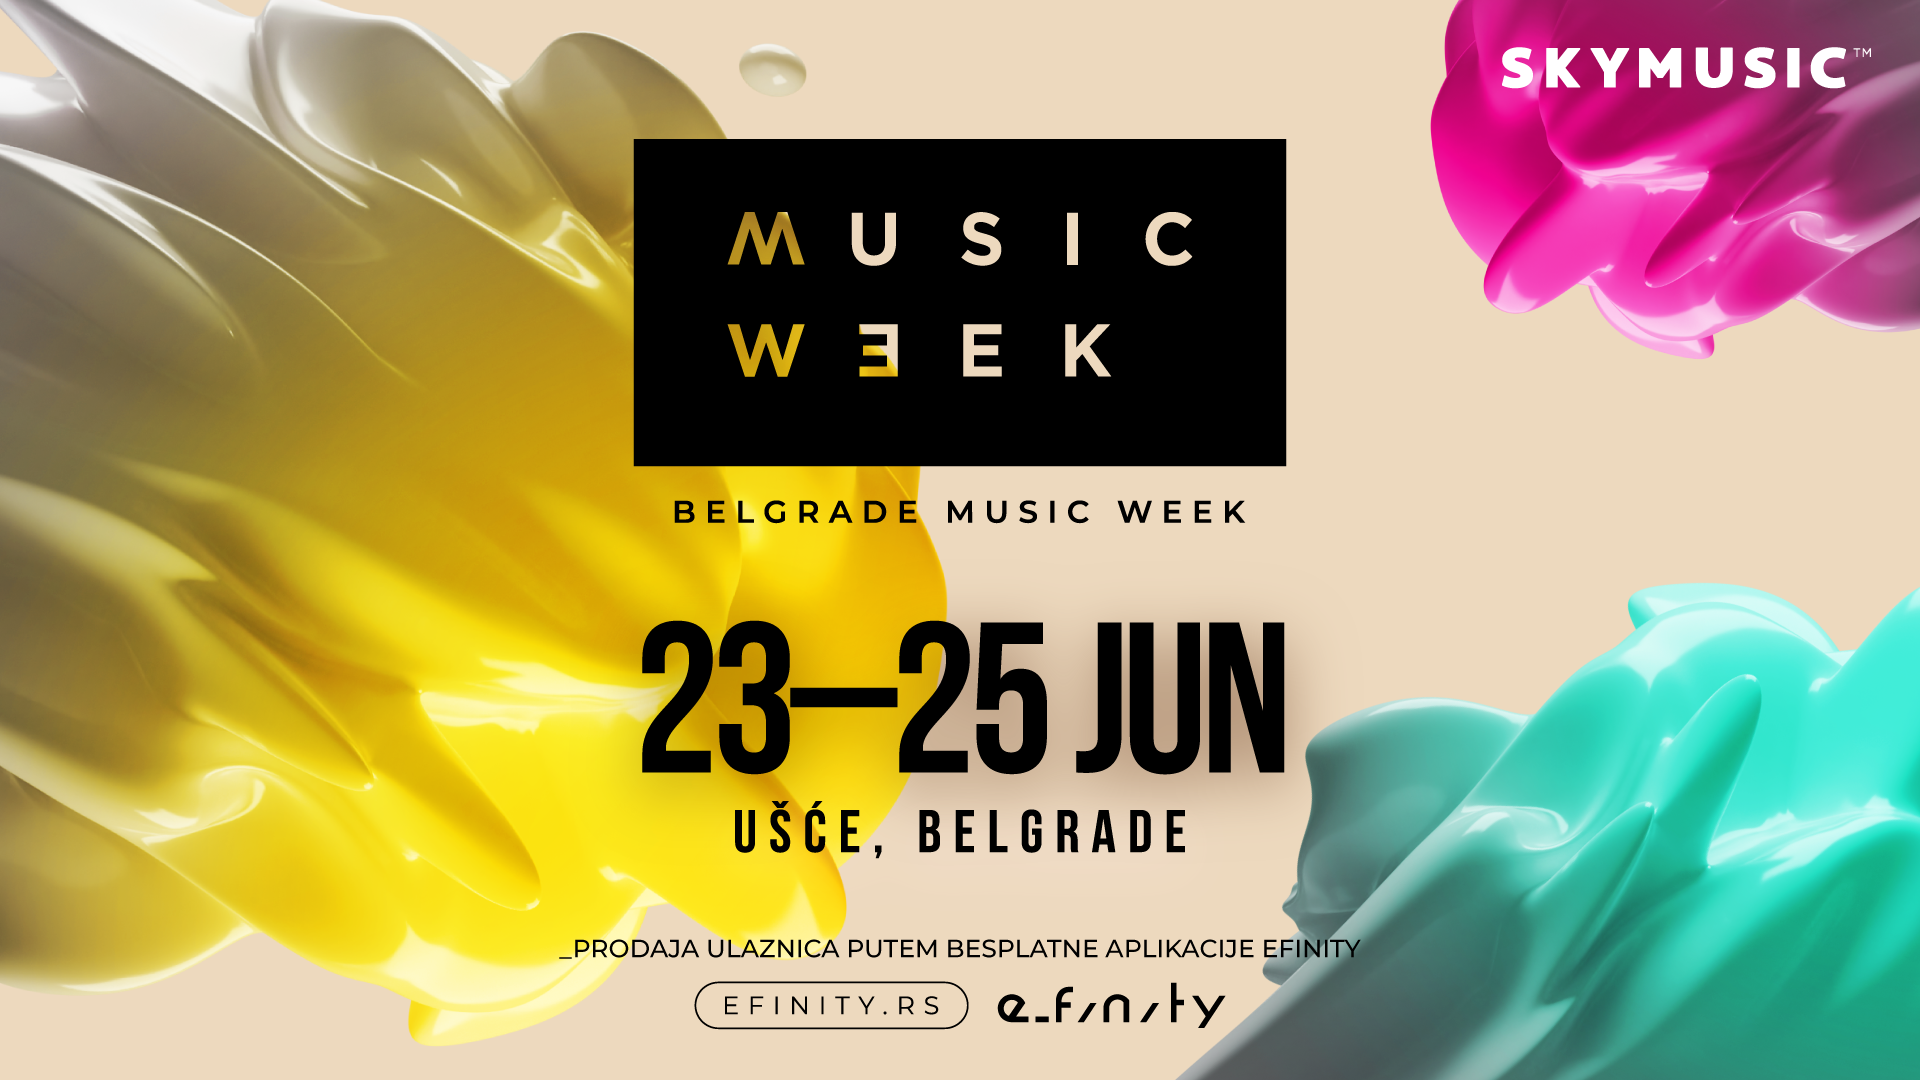 Belgrade Music Week from June 23 to 25 in Usce